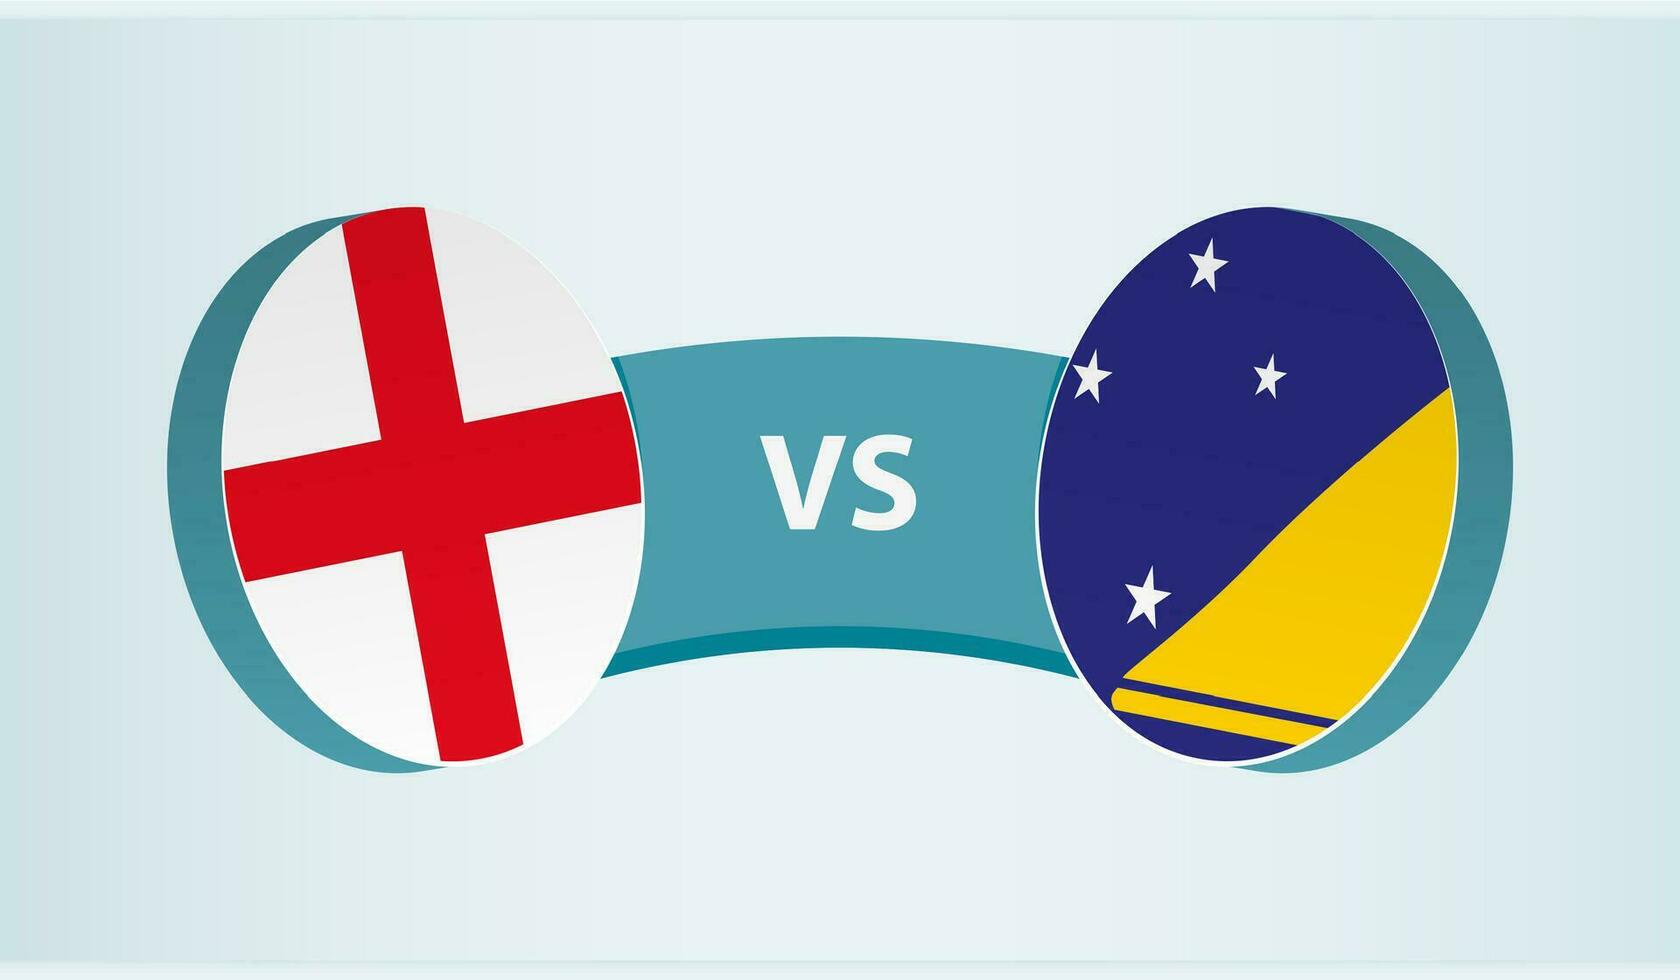 England versus Tokelau, team sports competition concept. vector